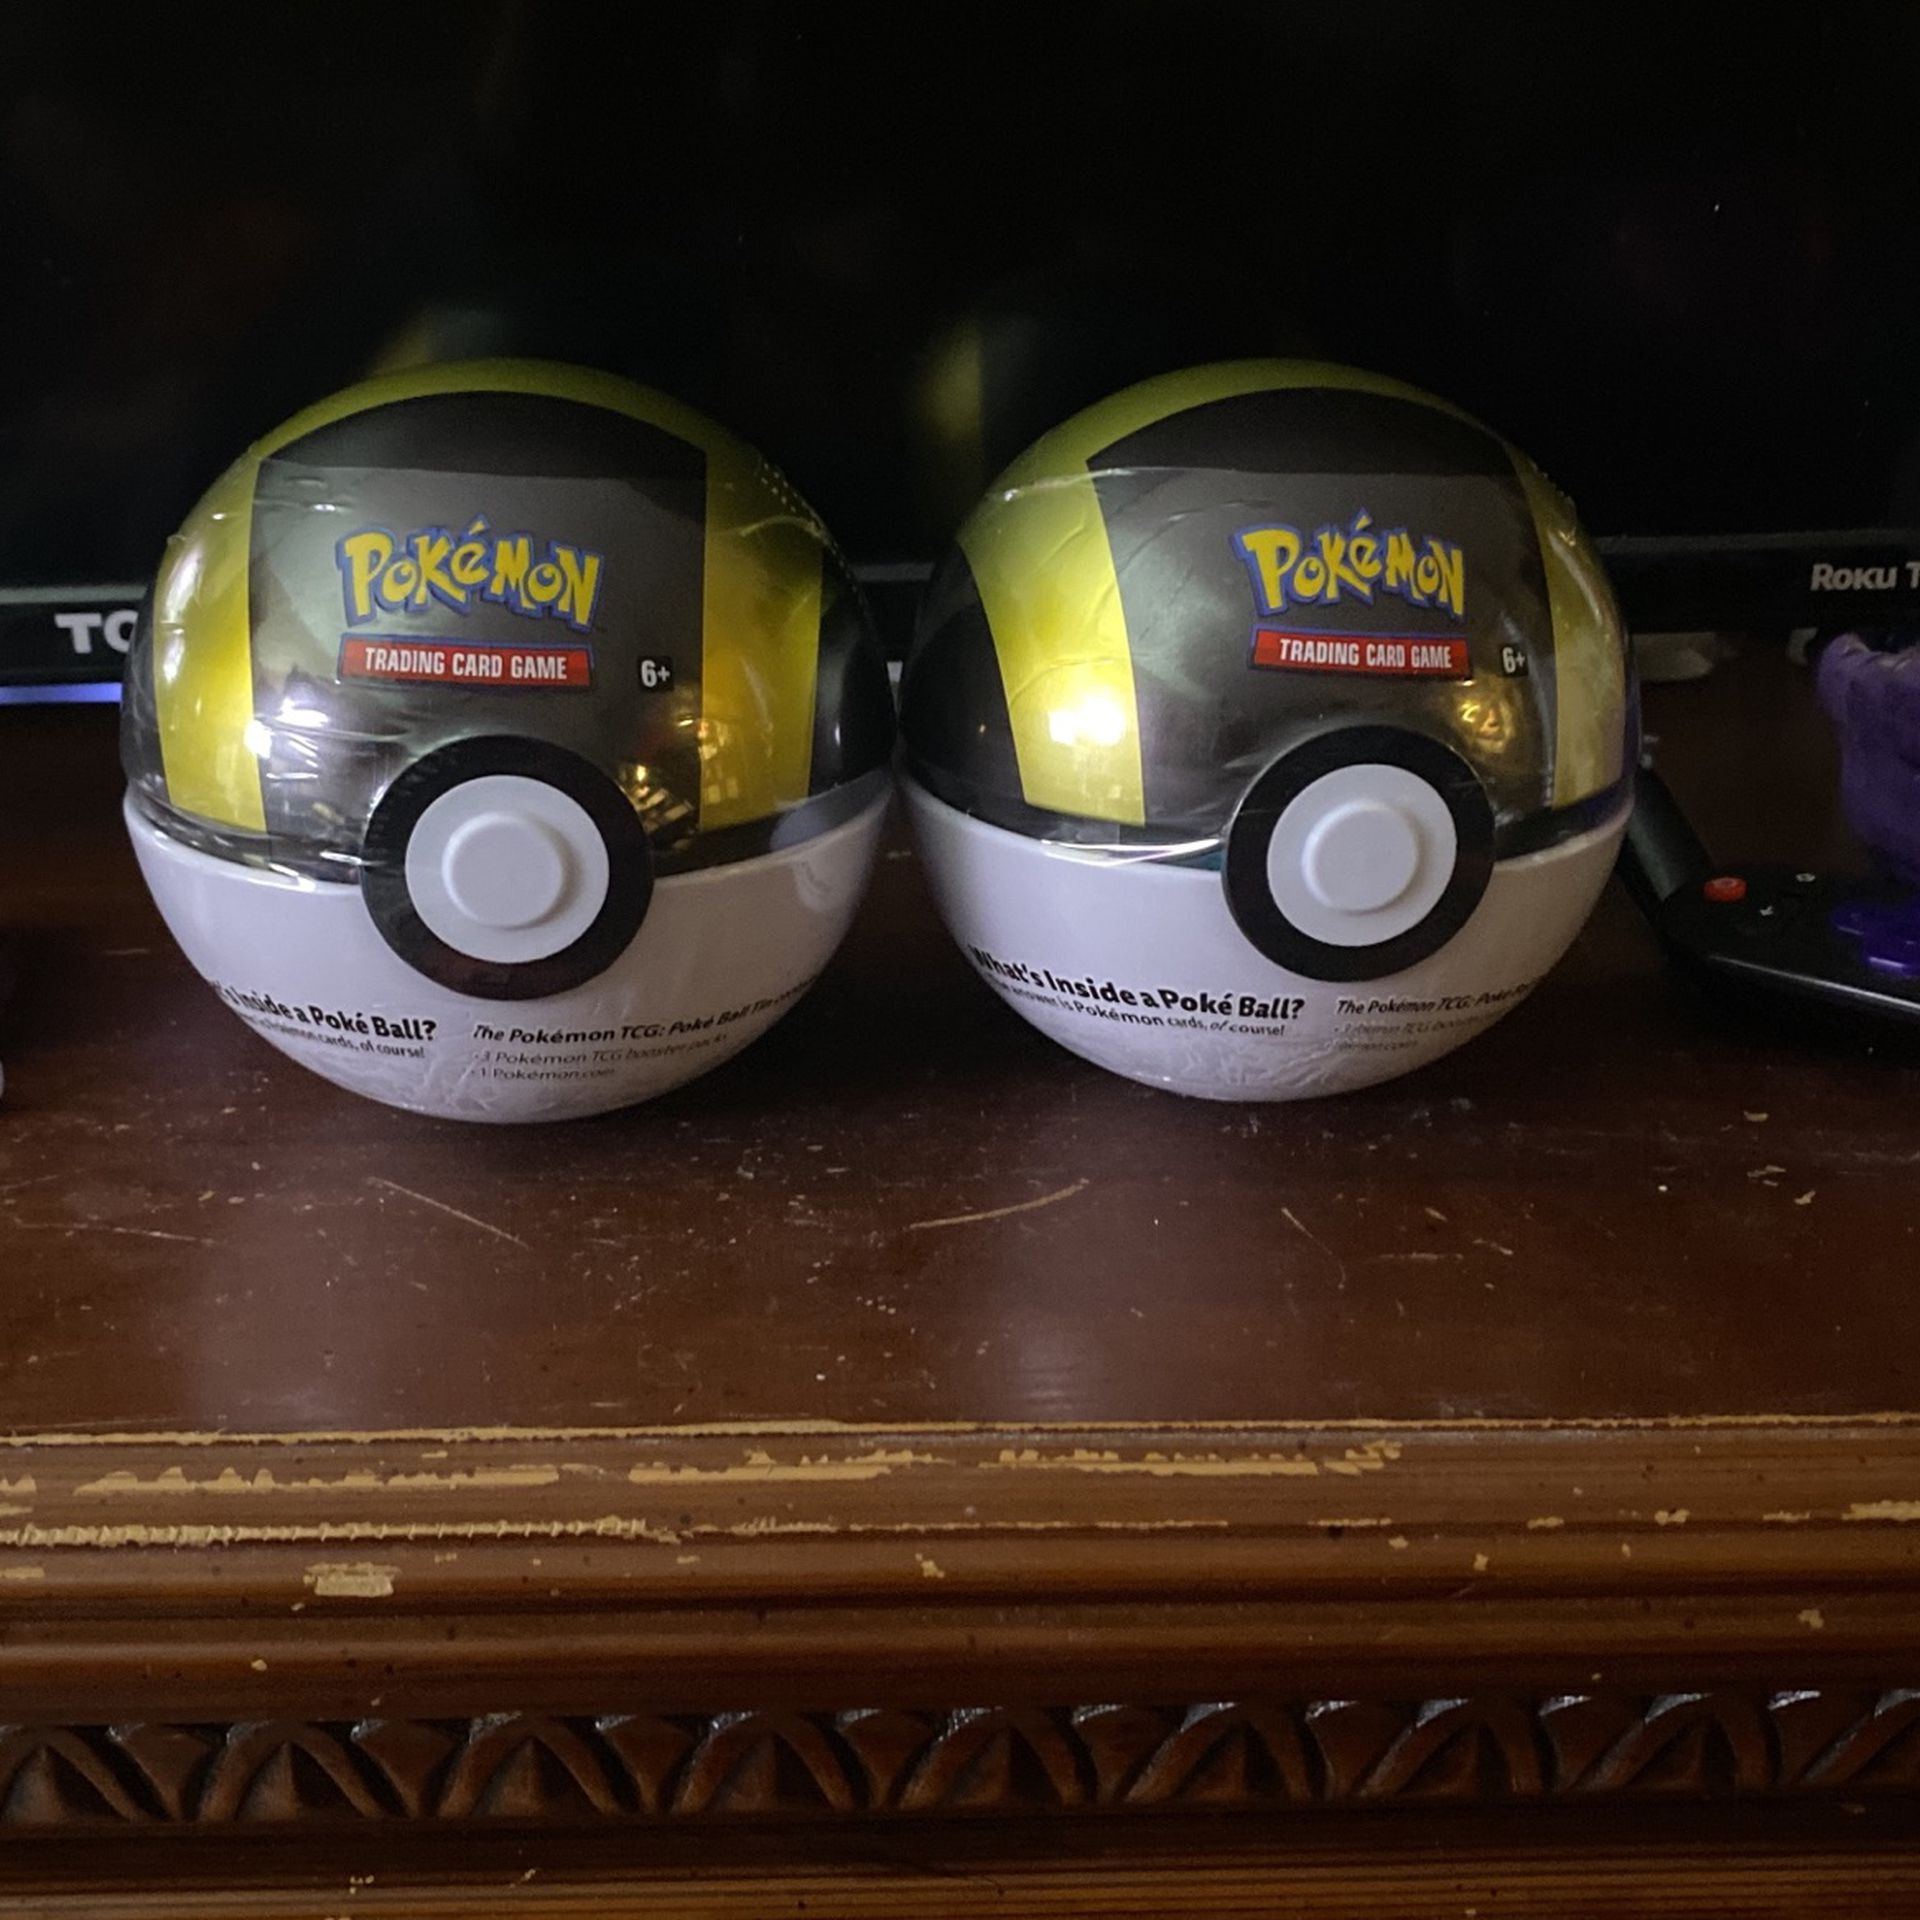 Pokémon Poke ball Collectors Tin (sealed)